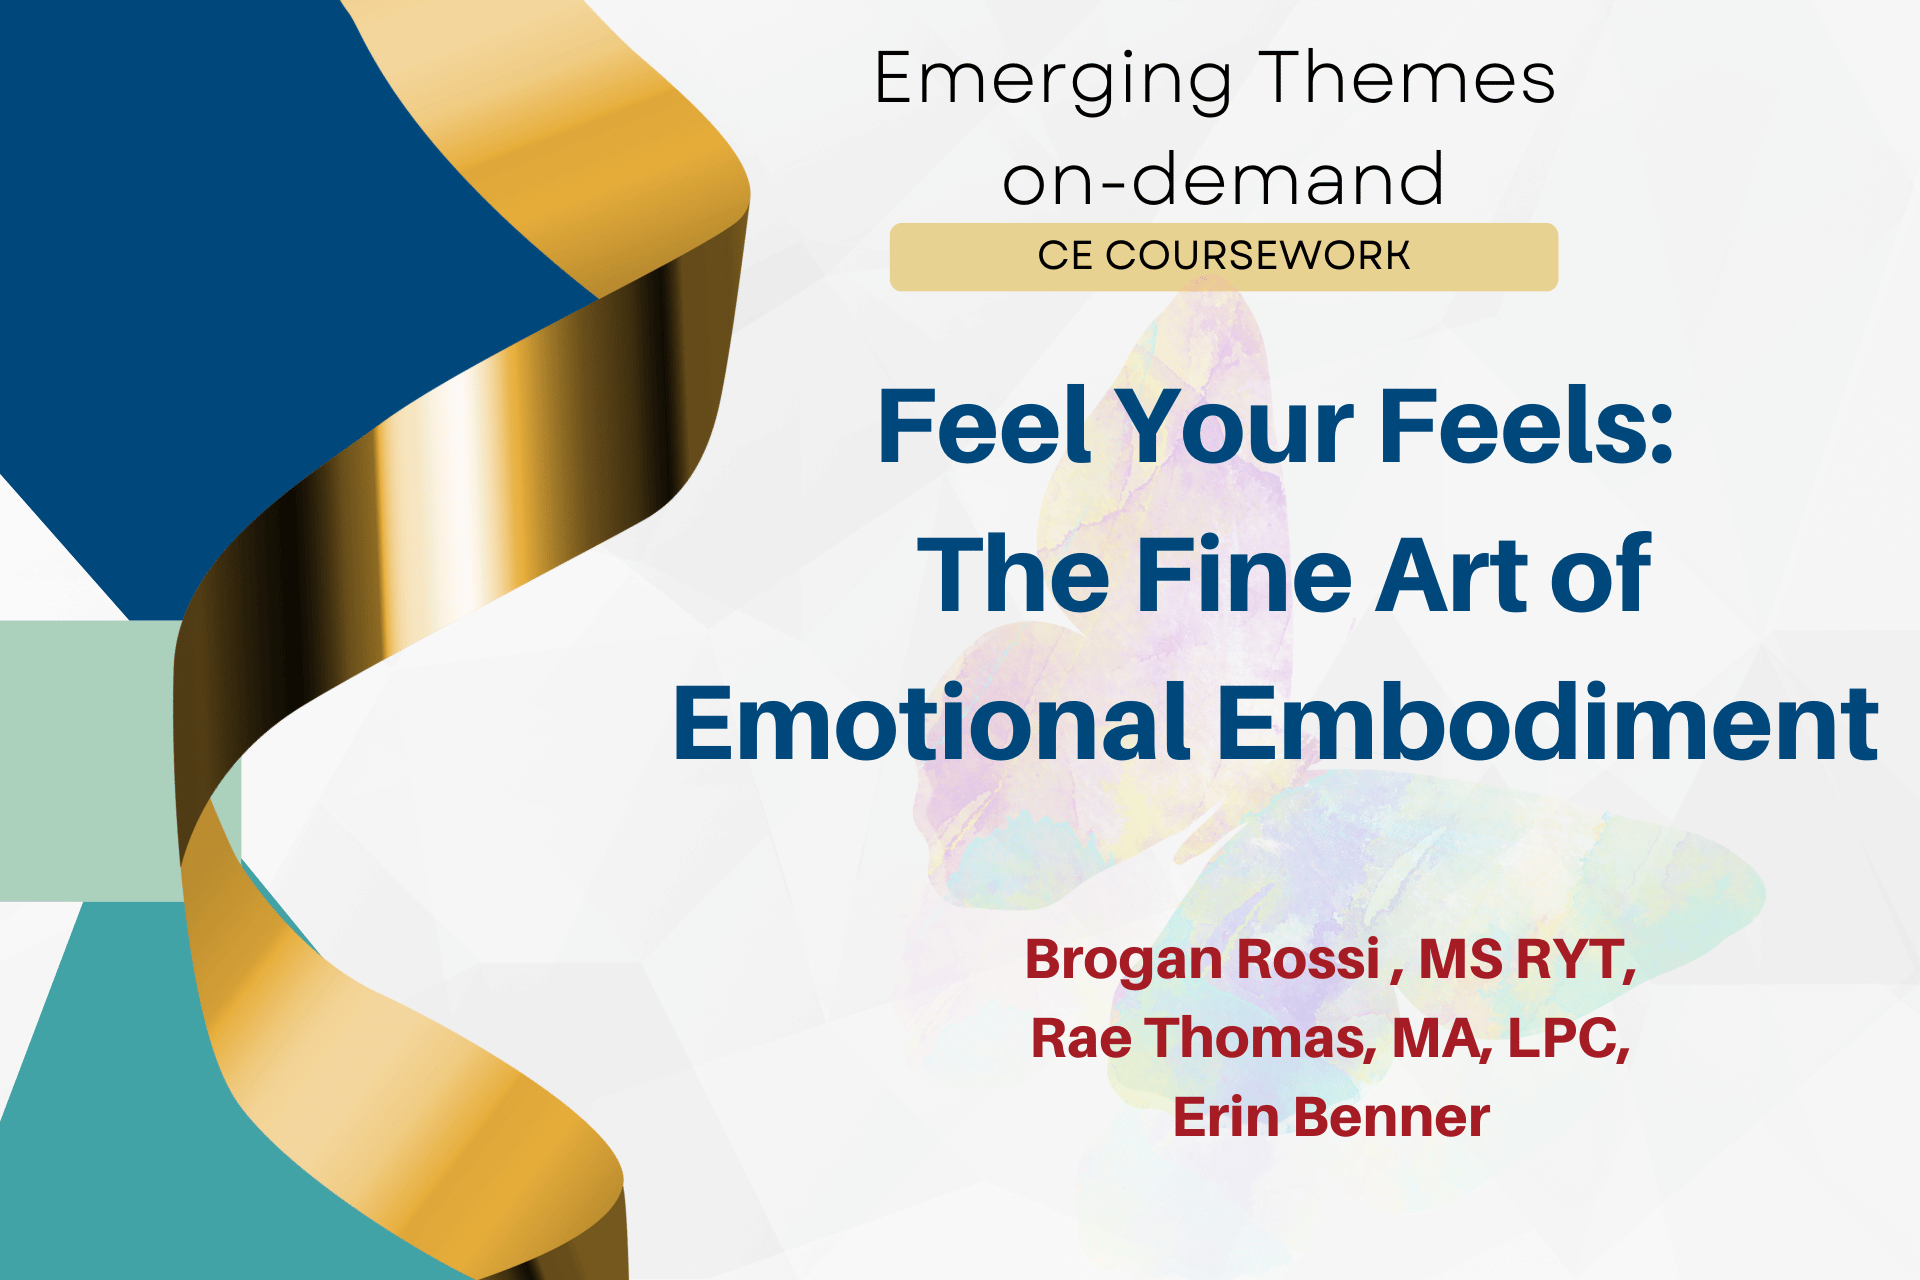 Feel Your Feels: The Fine Art of Emotional Embodiment